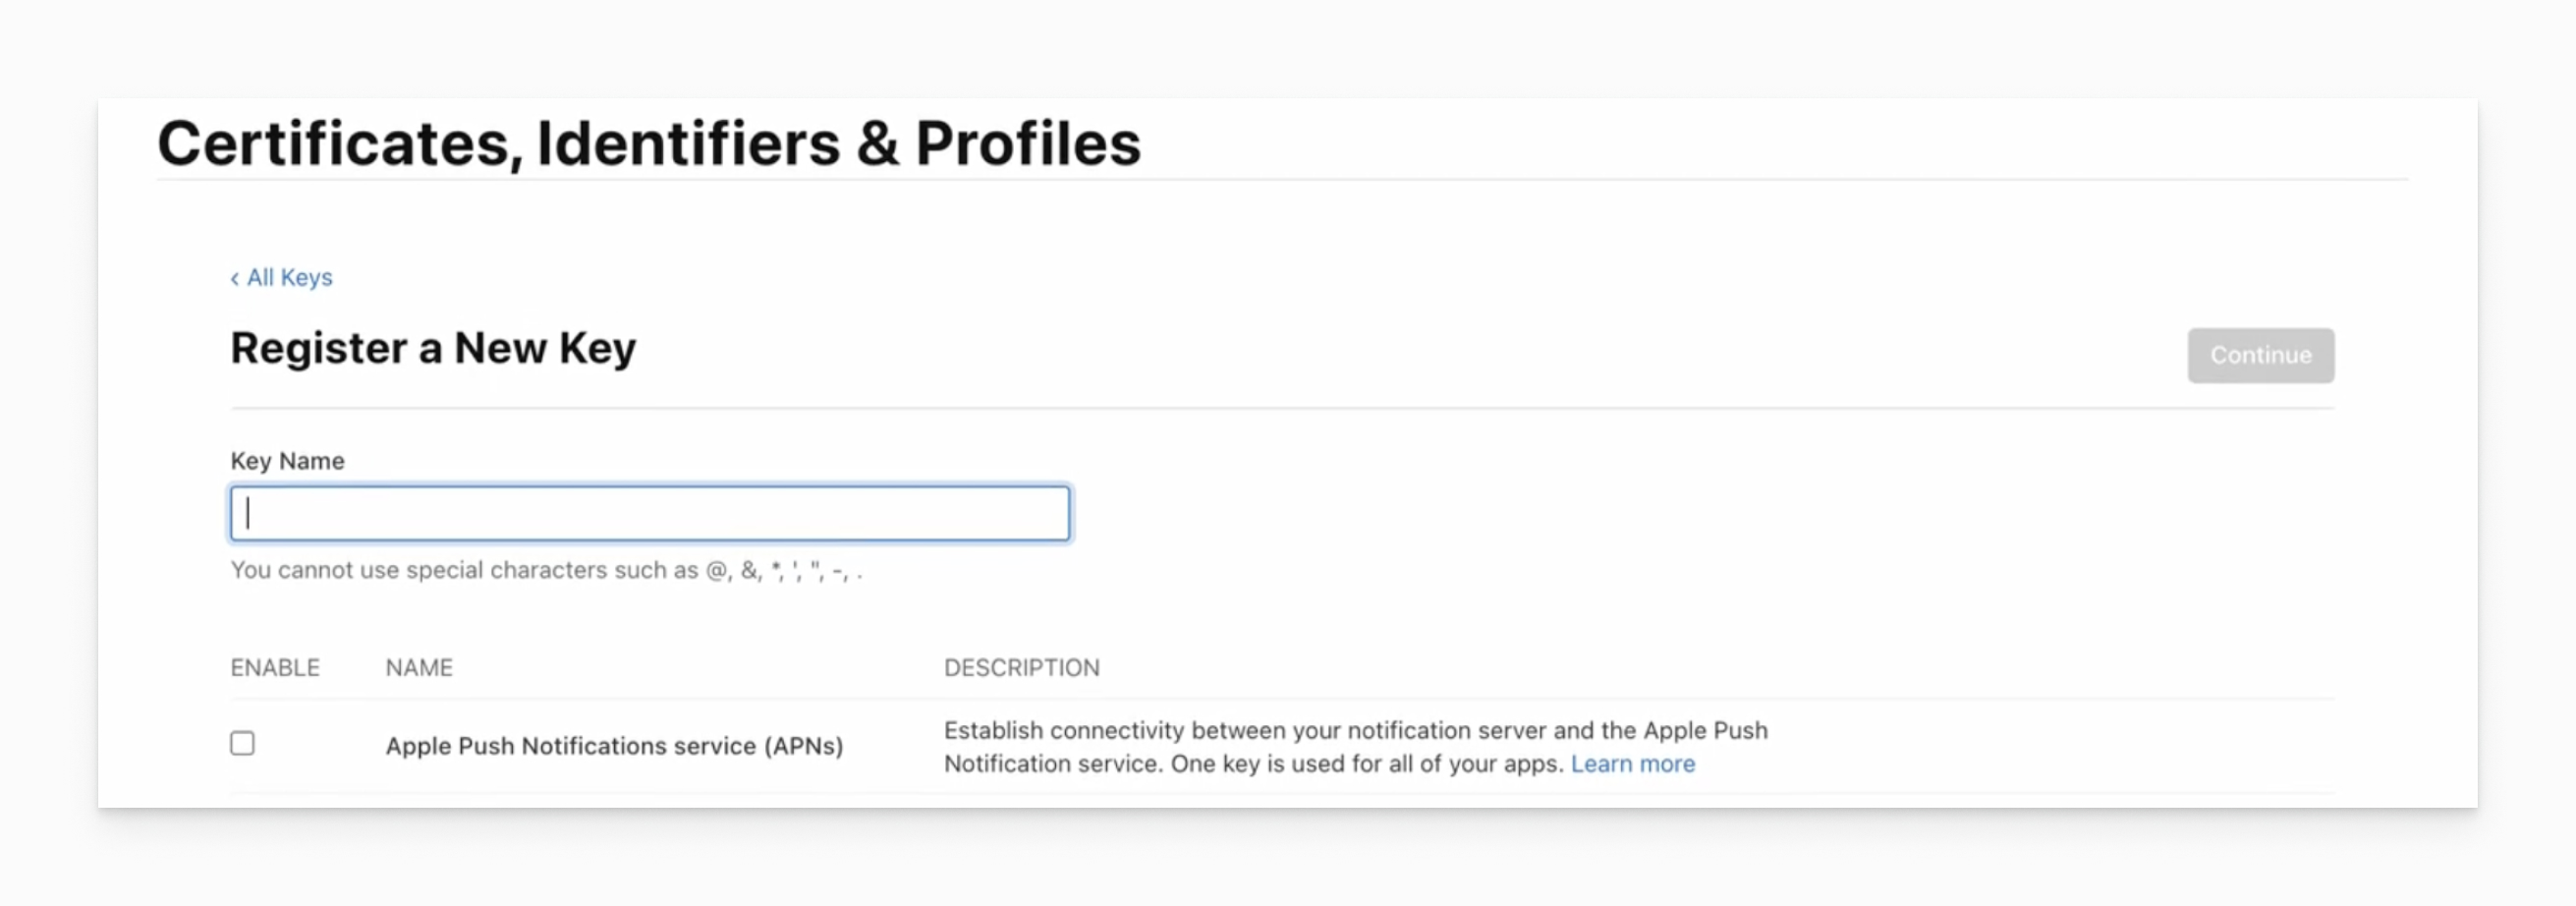 Apple Developer Account - Register a New Key Page. Select APNS